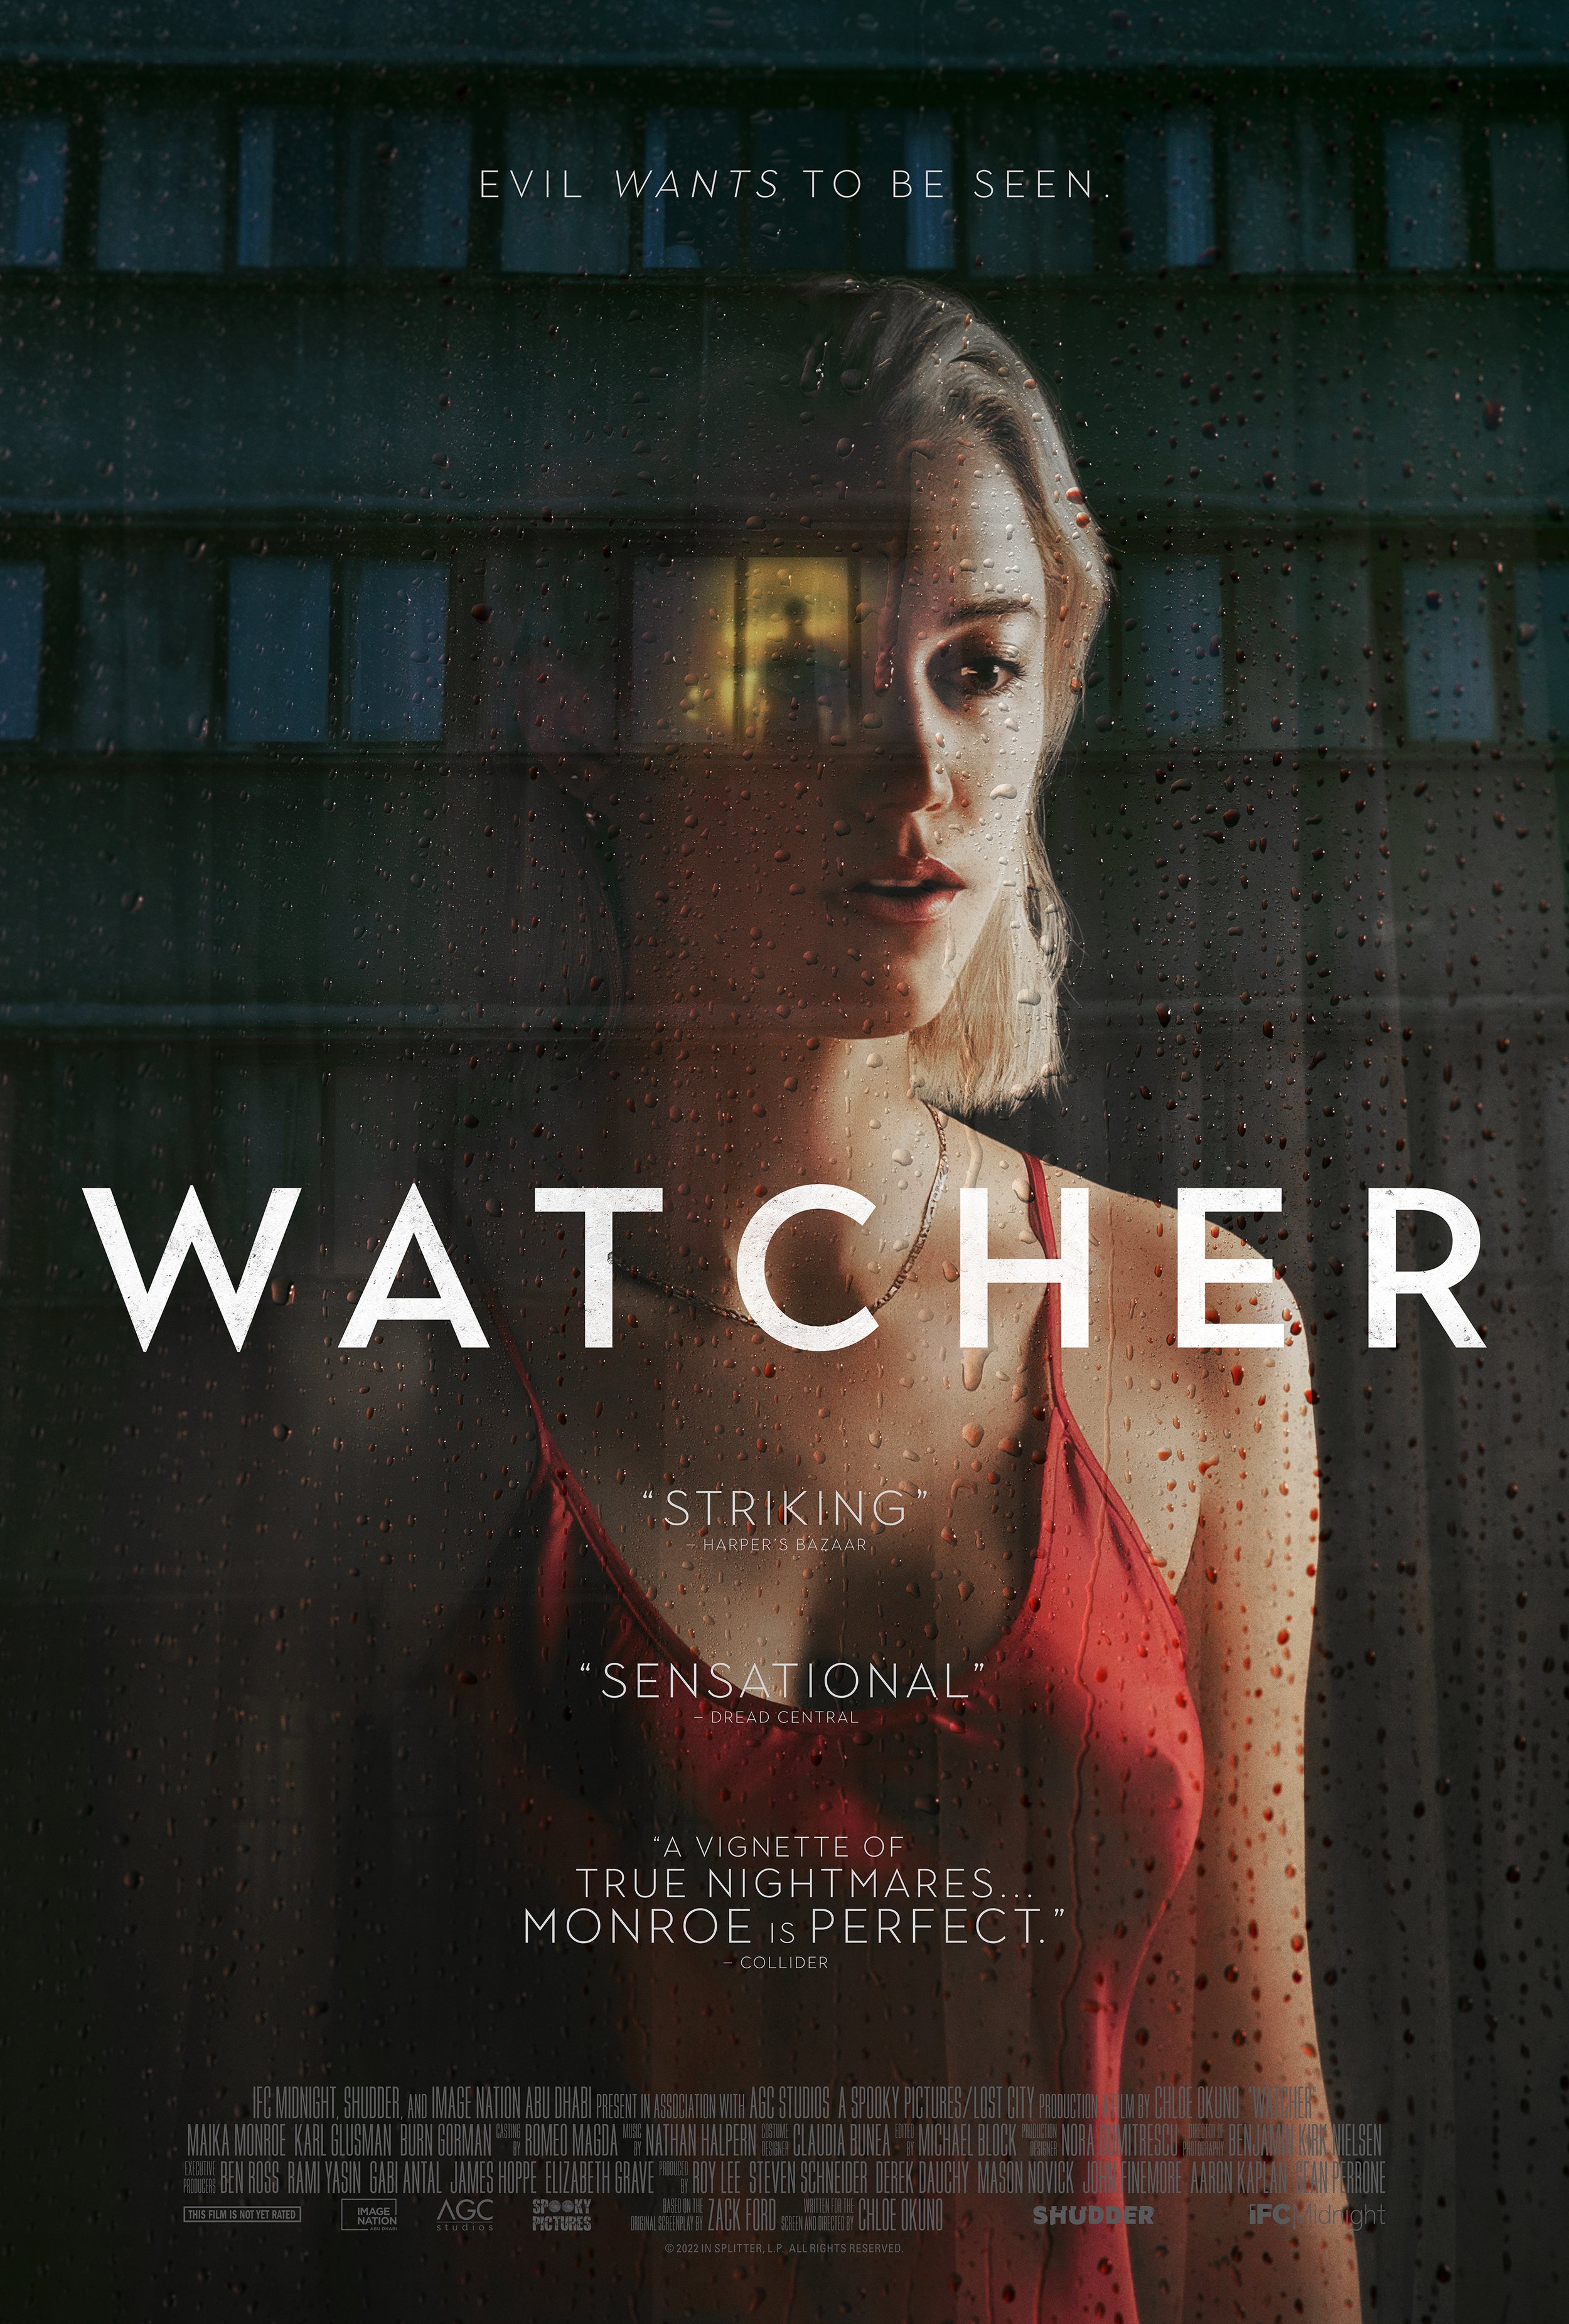 Watcher.jpg